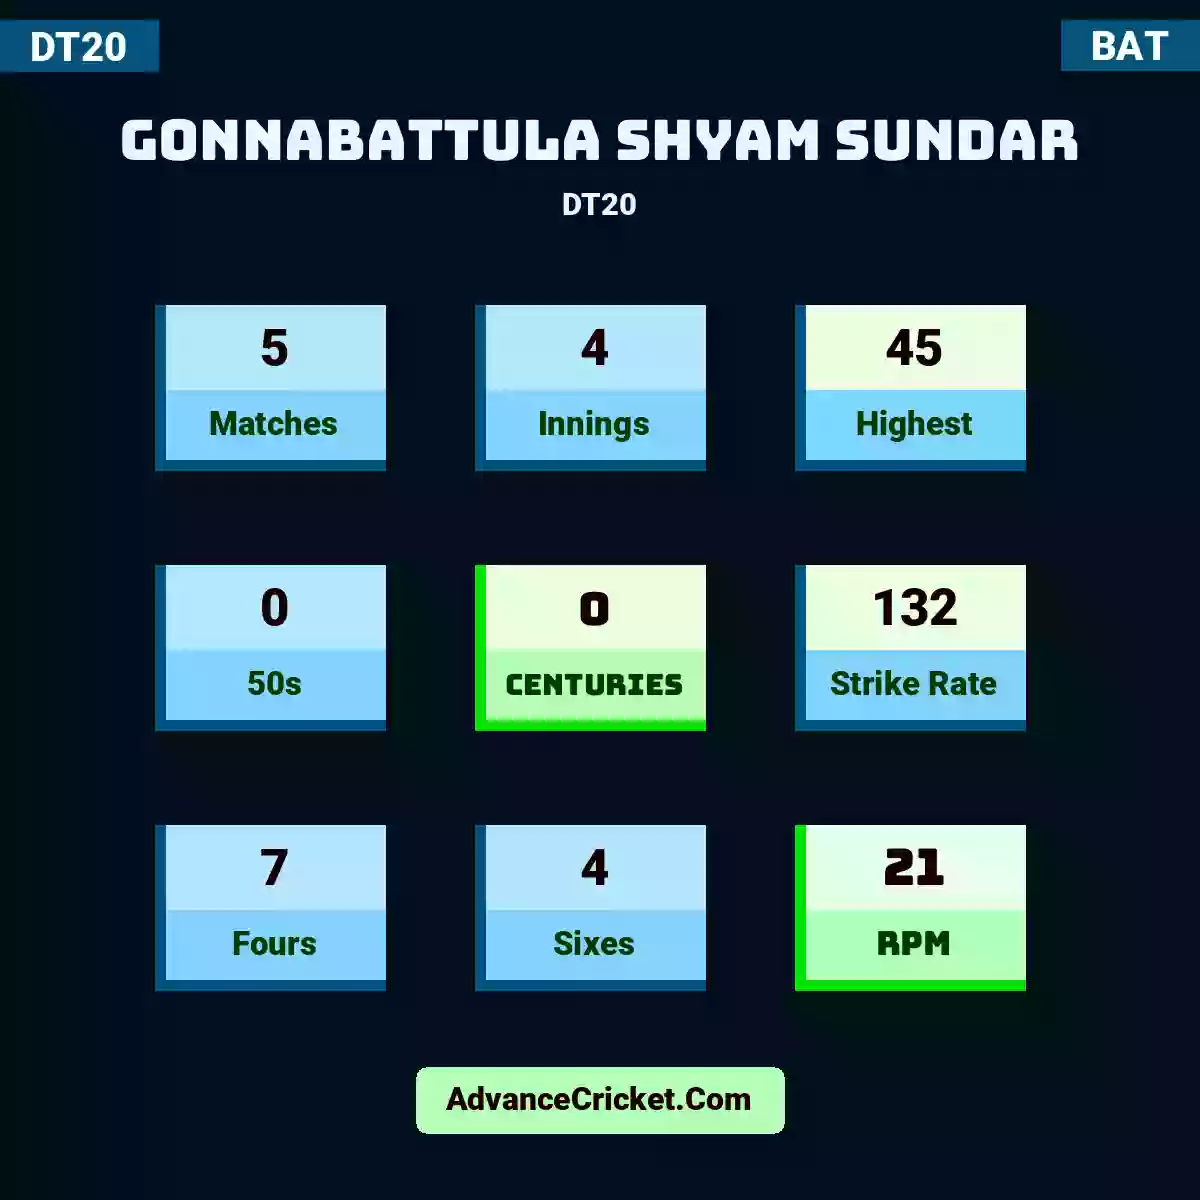 Gonnabattula Shyam Sundar DT20 , Gonnabattula Shyam Sundar played 5 matches, scored 45 runs as highest, 0 half-centuries, and 0 centuries, with a strike rate of 132. G.Shyam.Sundar hit 7 fours and 4 sixes, with an RPM of 21.